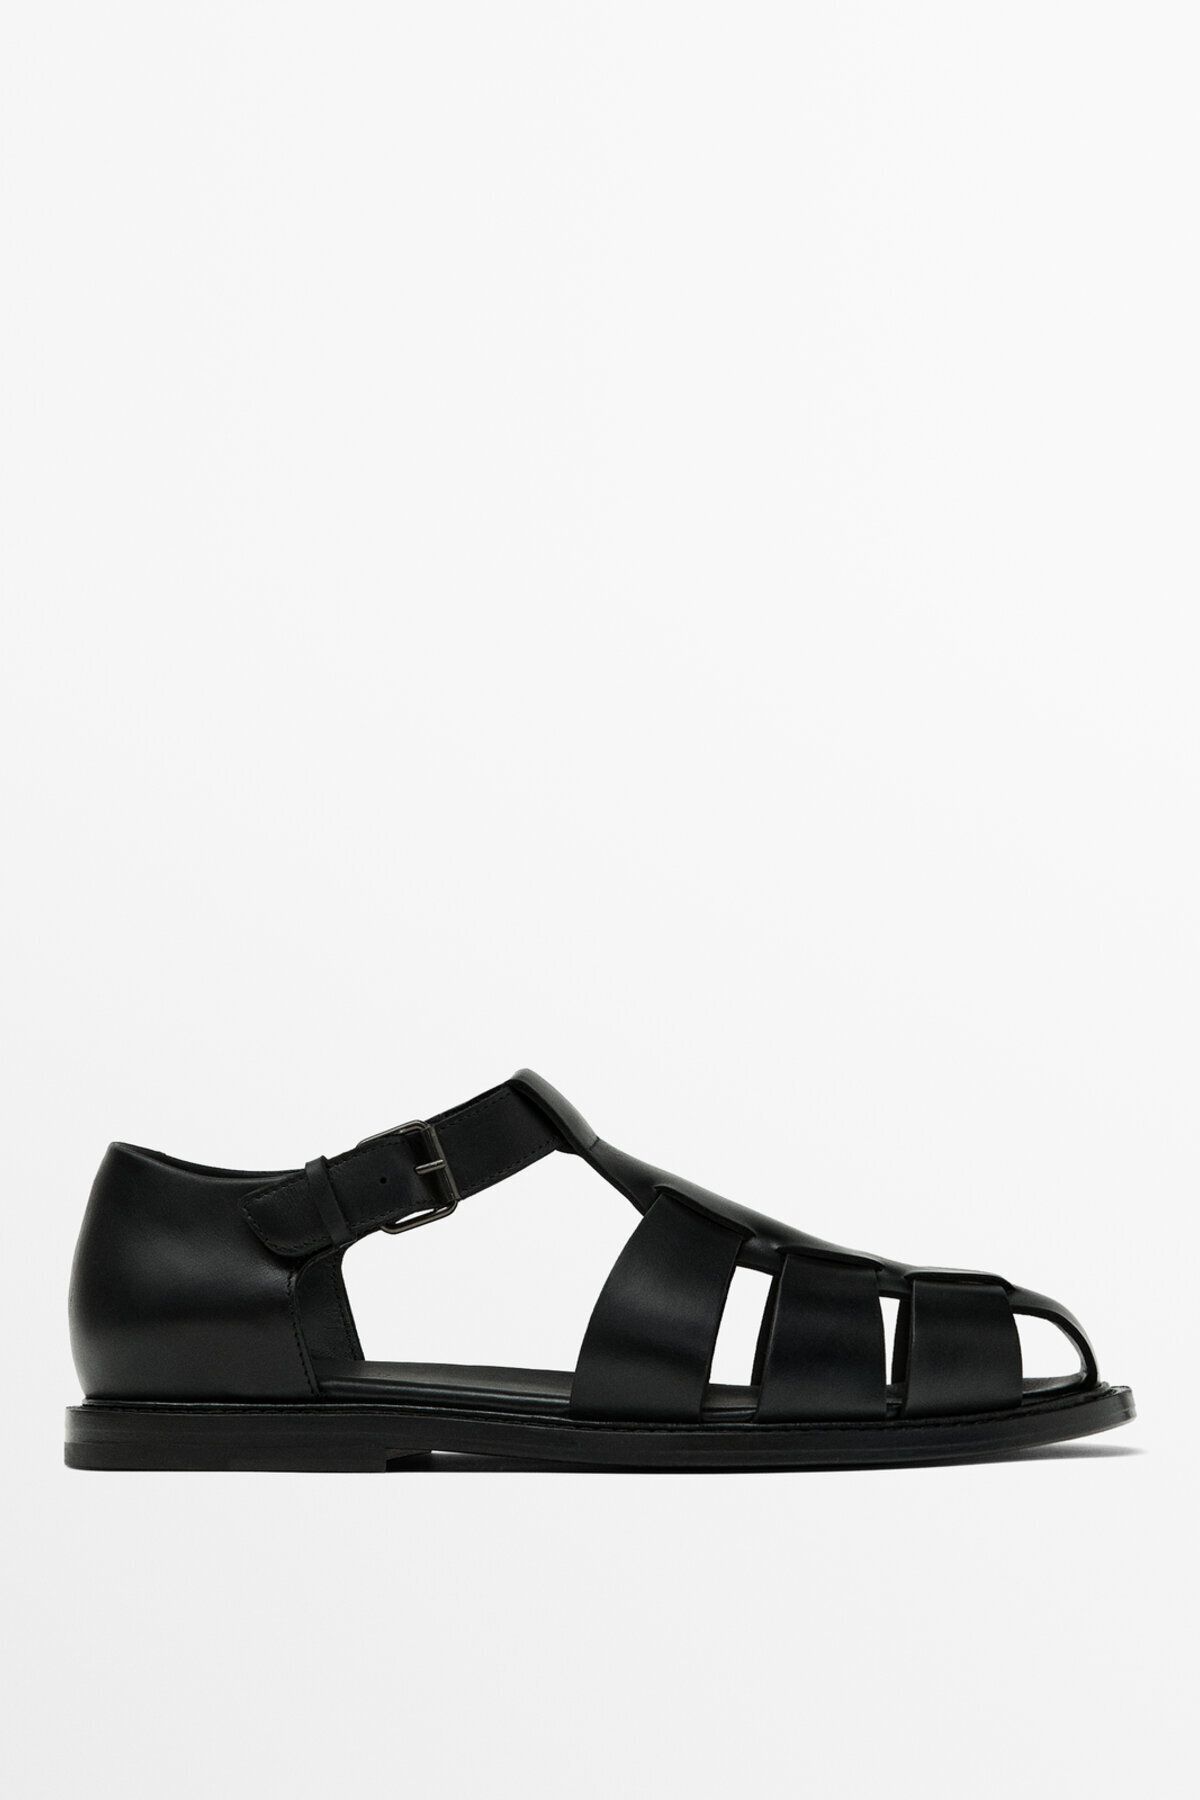 Massimo Dutti Limited Edition - Siyah deri bantlı sandalet